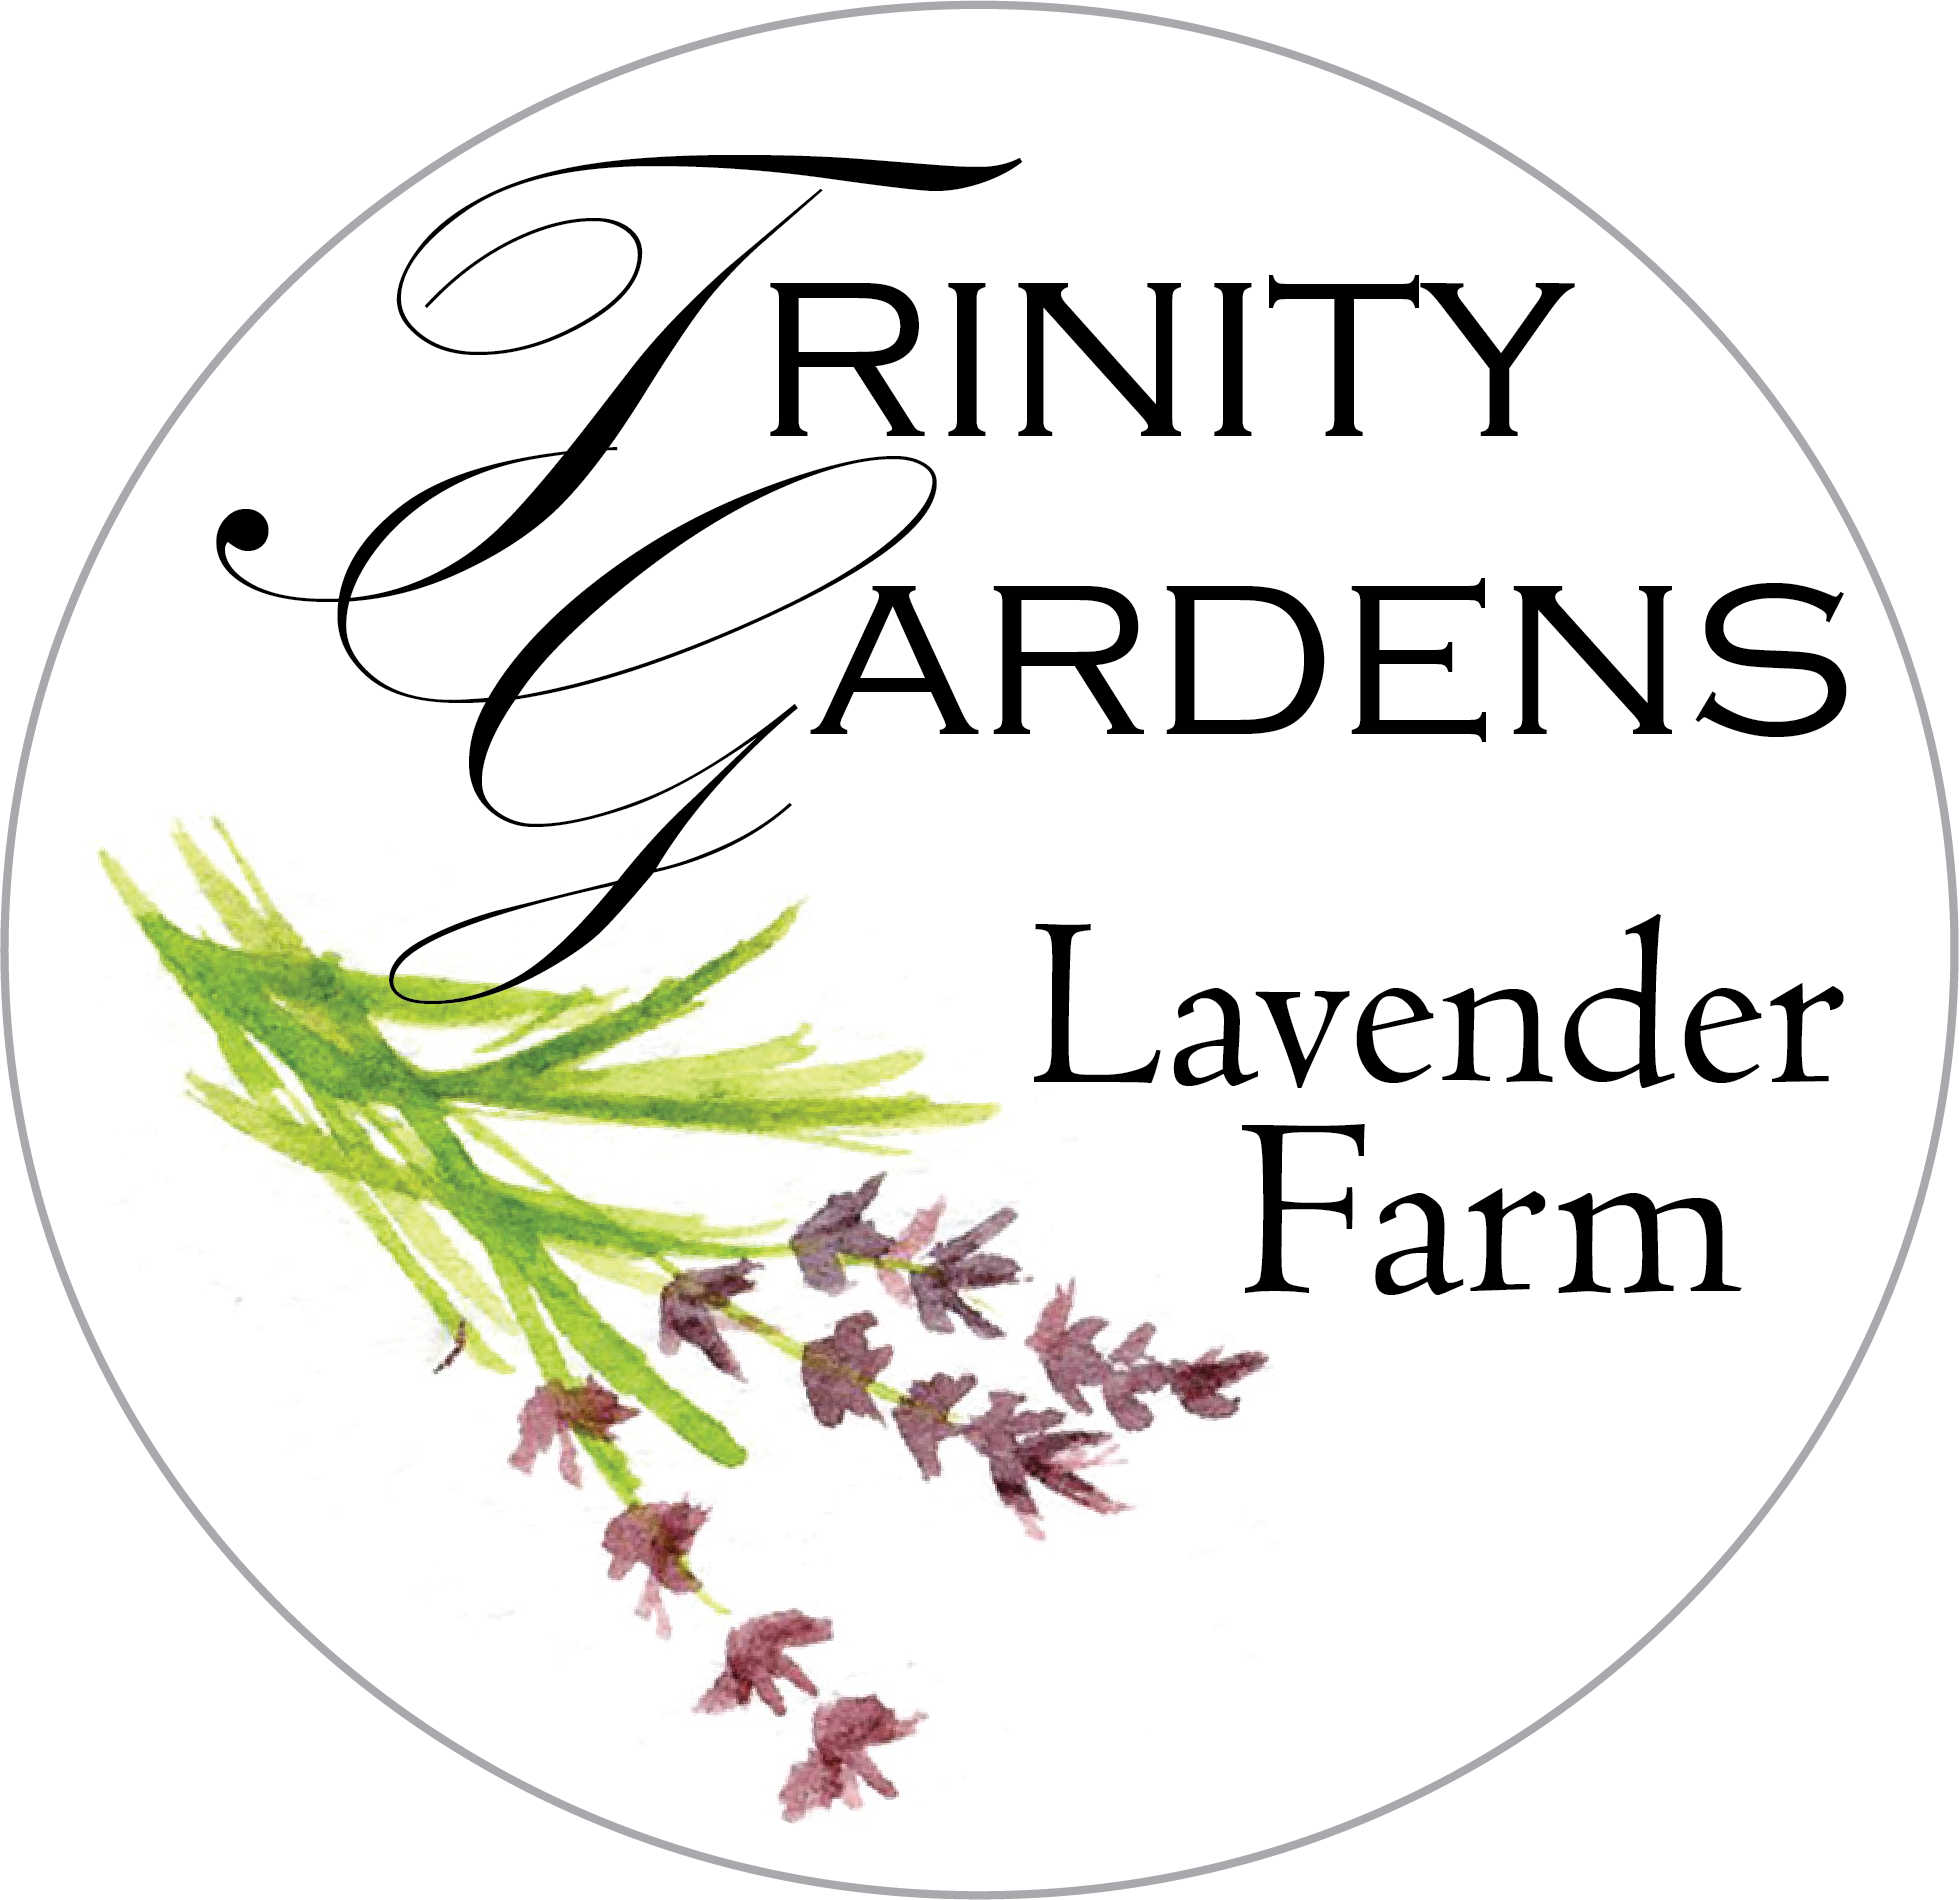 Trinity Gardens Lavender Farm